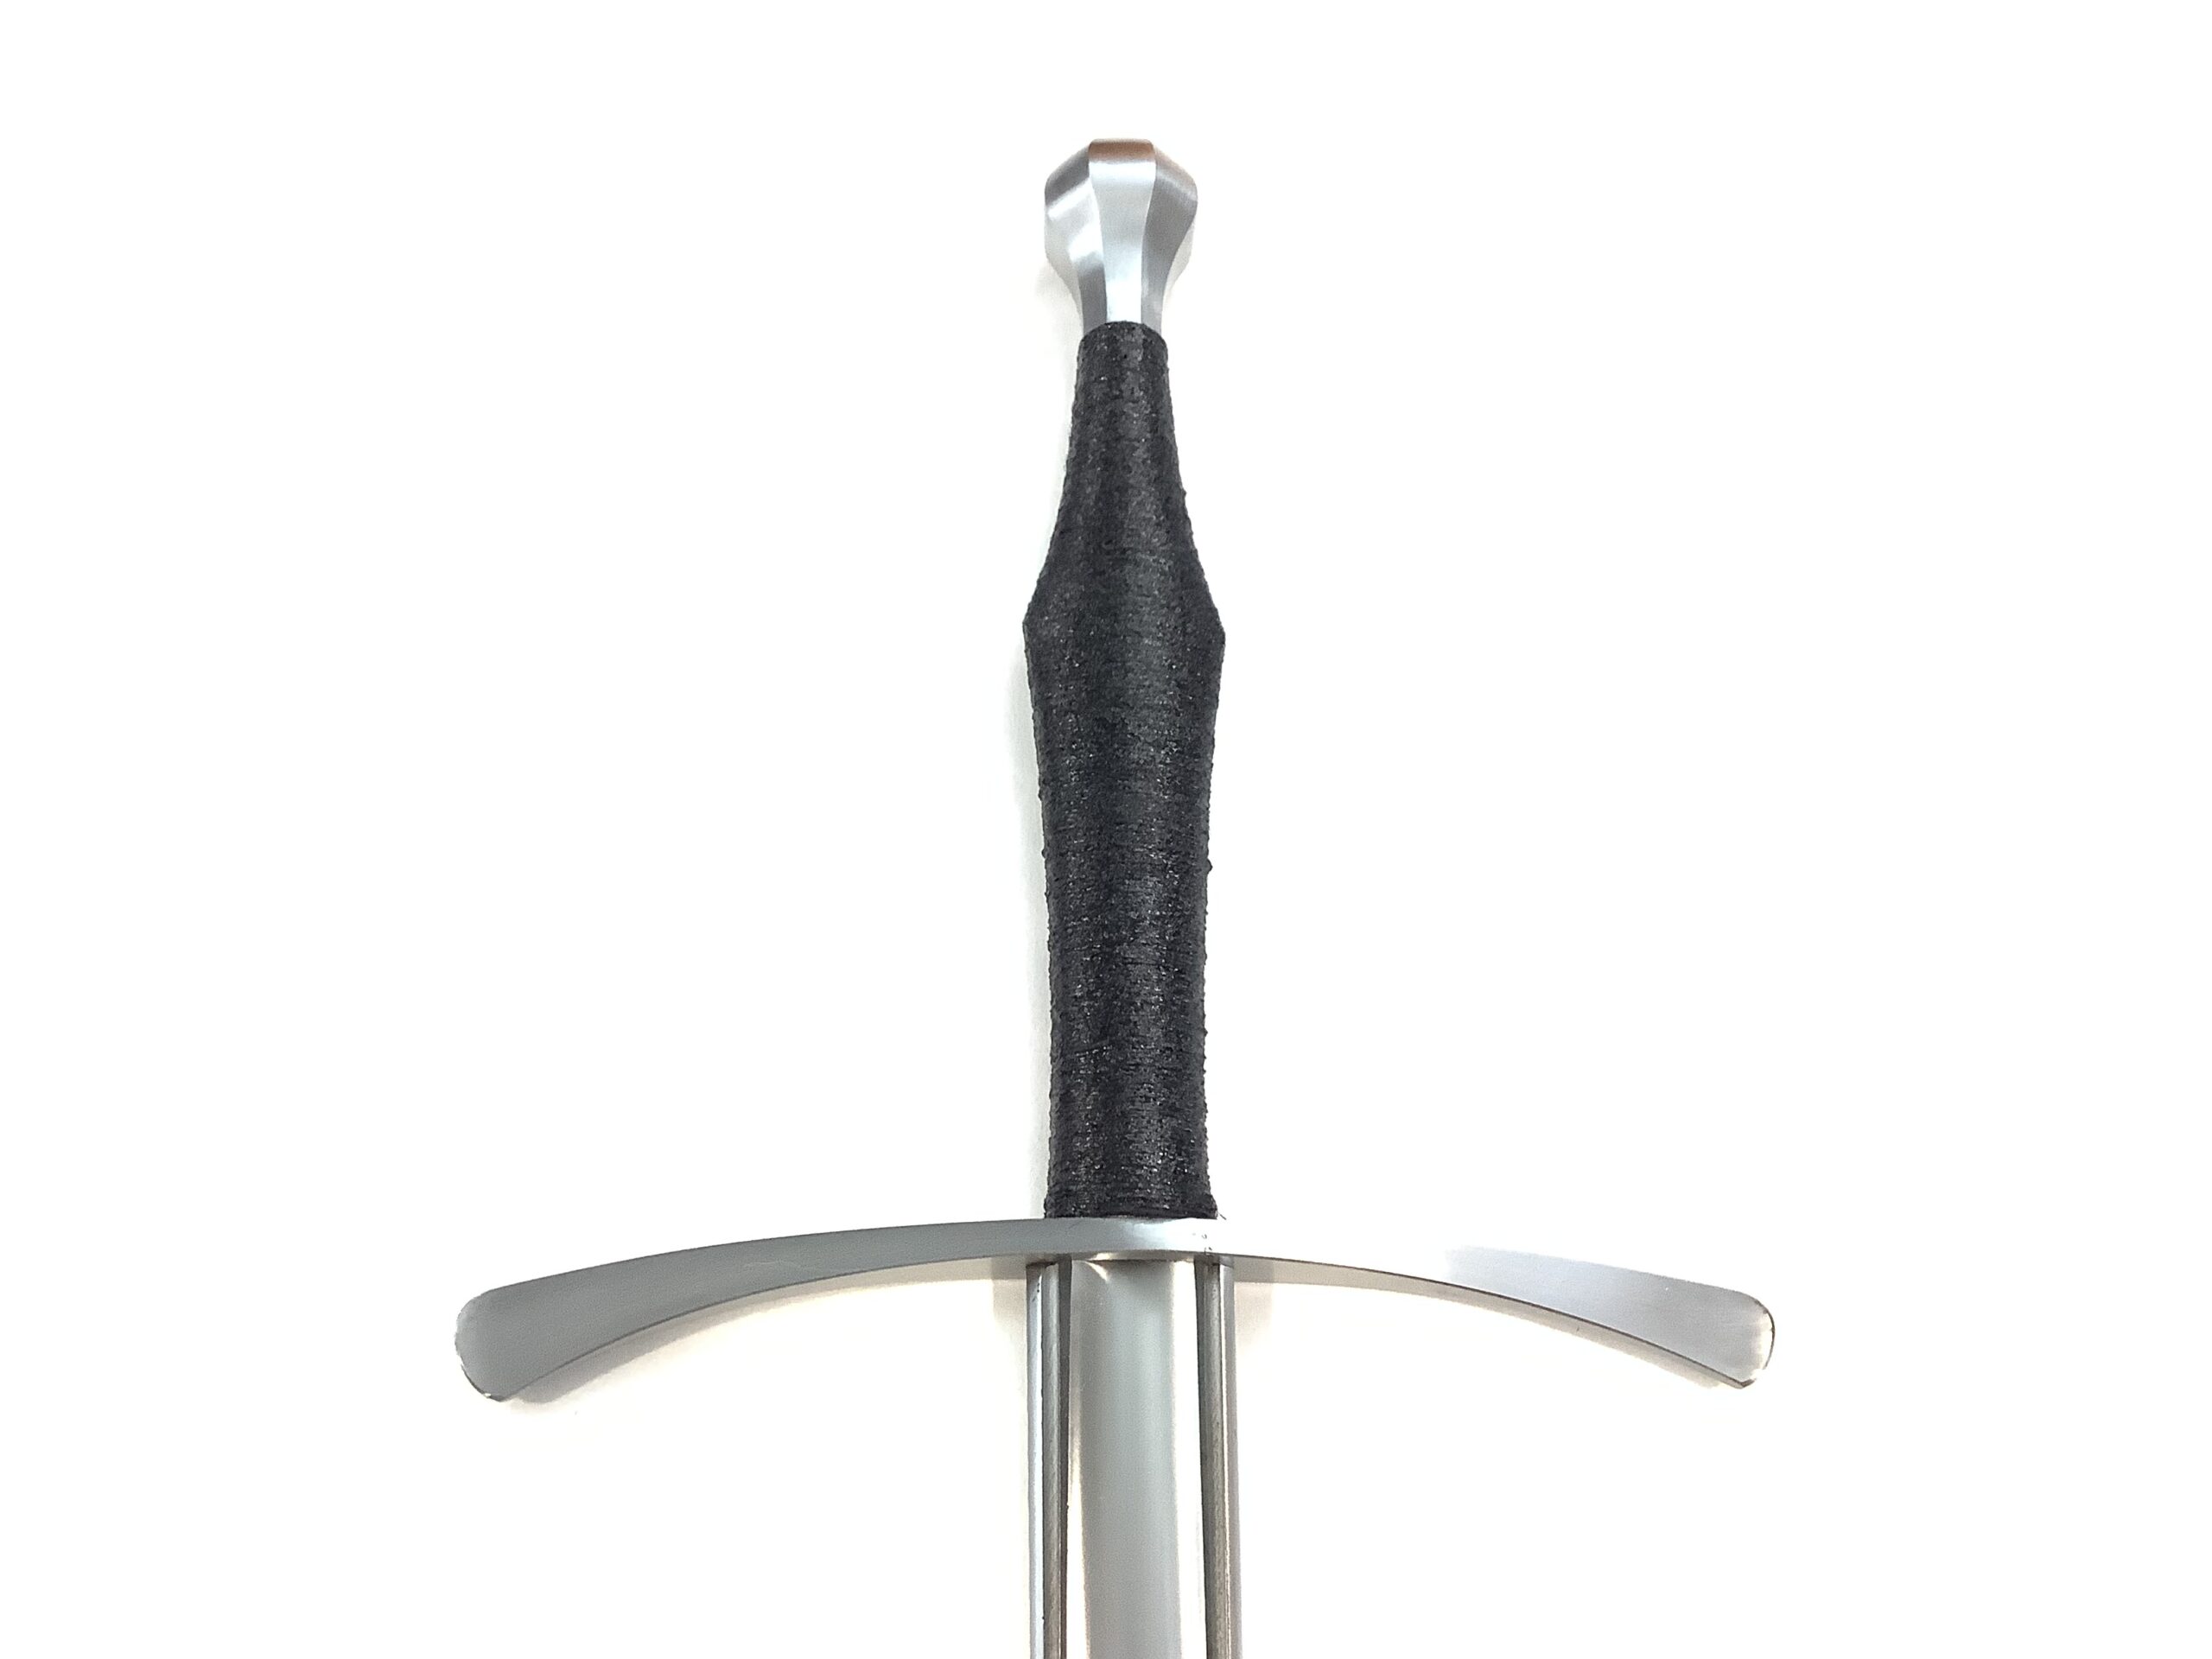 Chlebowski Fencing Sword III Black (6)